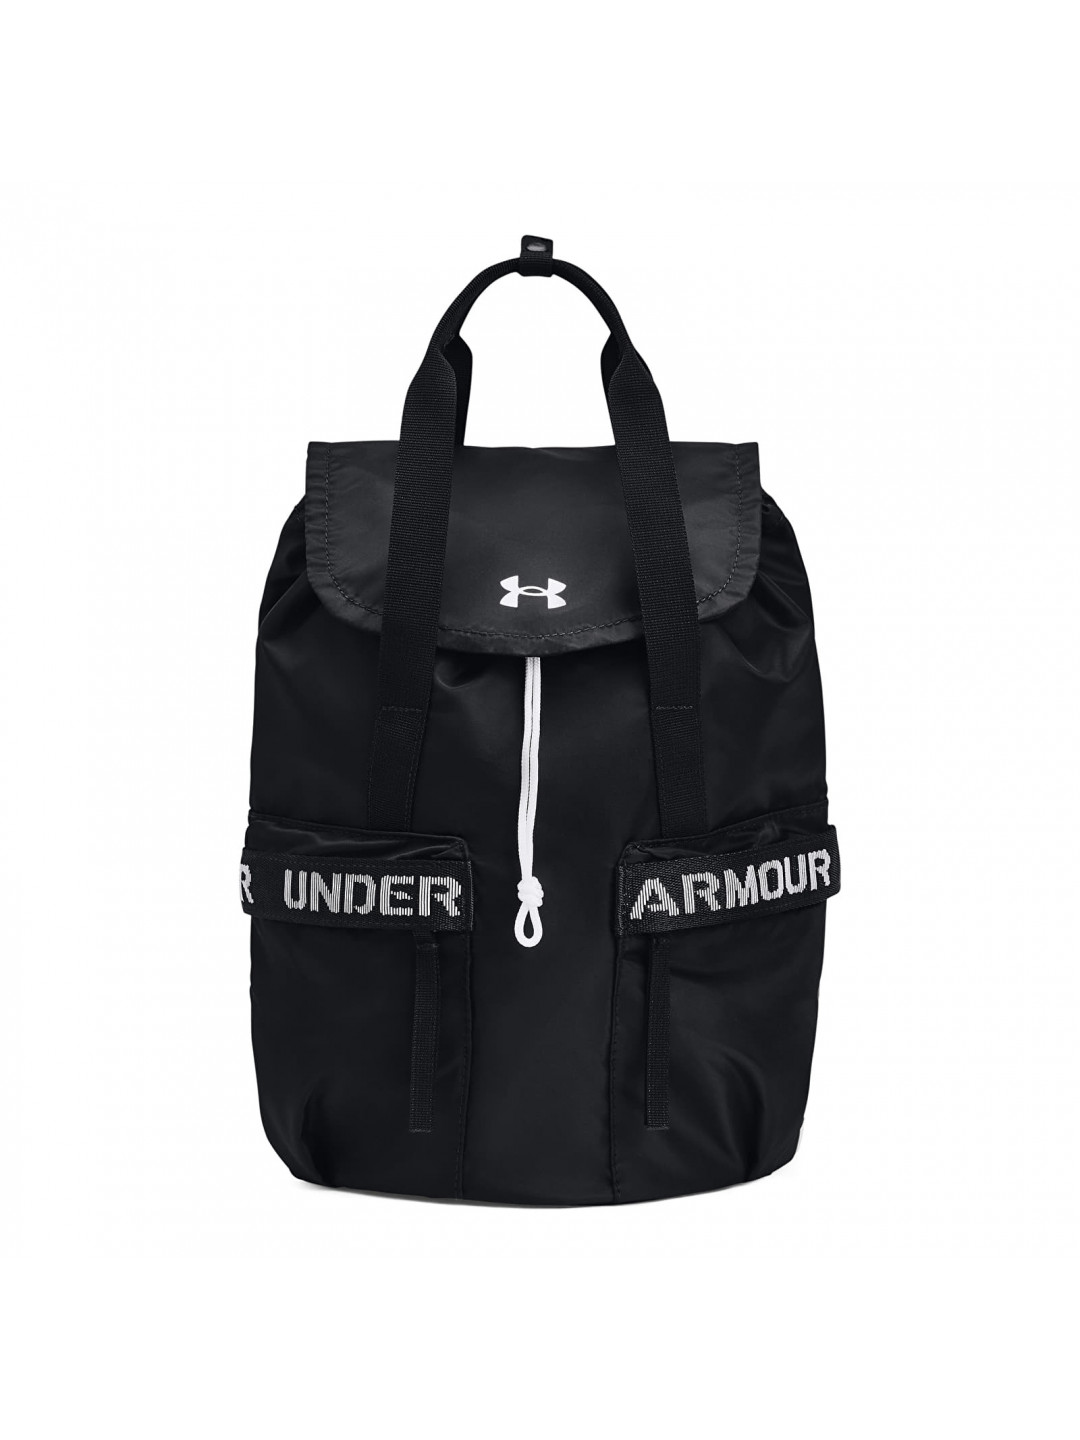 Under Armour Favorite Backpack Black Black White